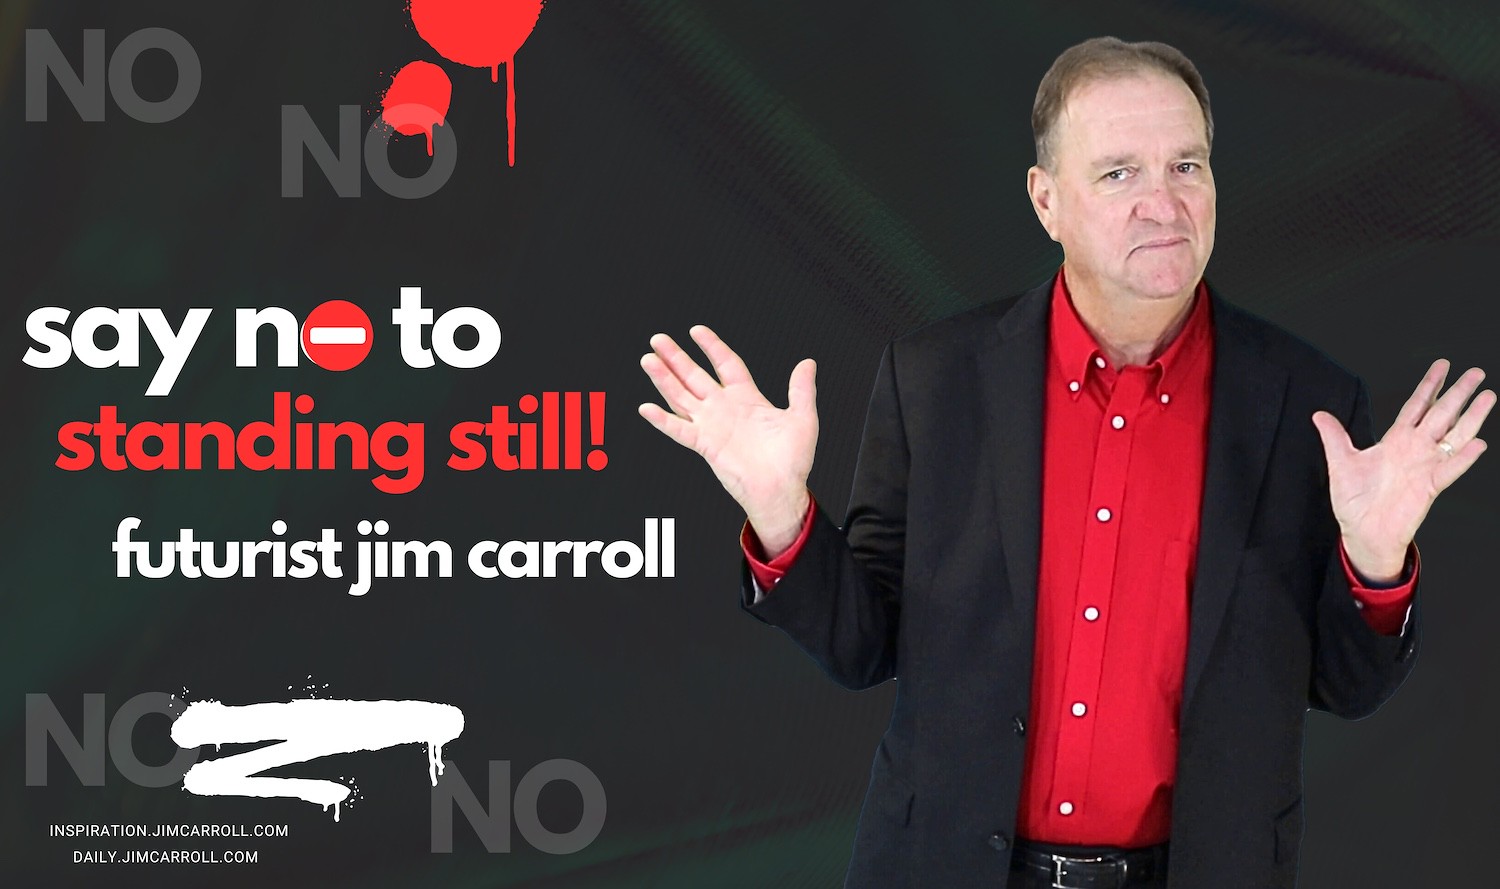 "Say no to standing still" - Futurist Jim Carroll